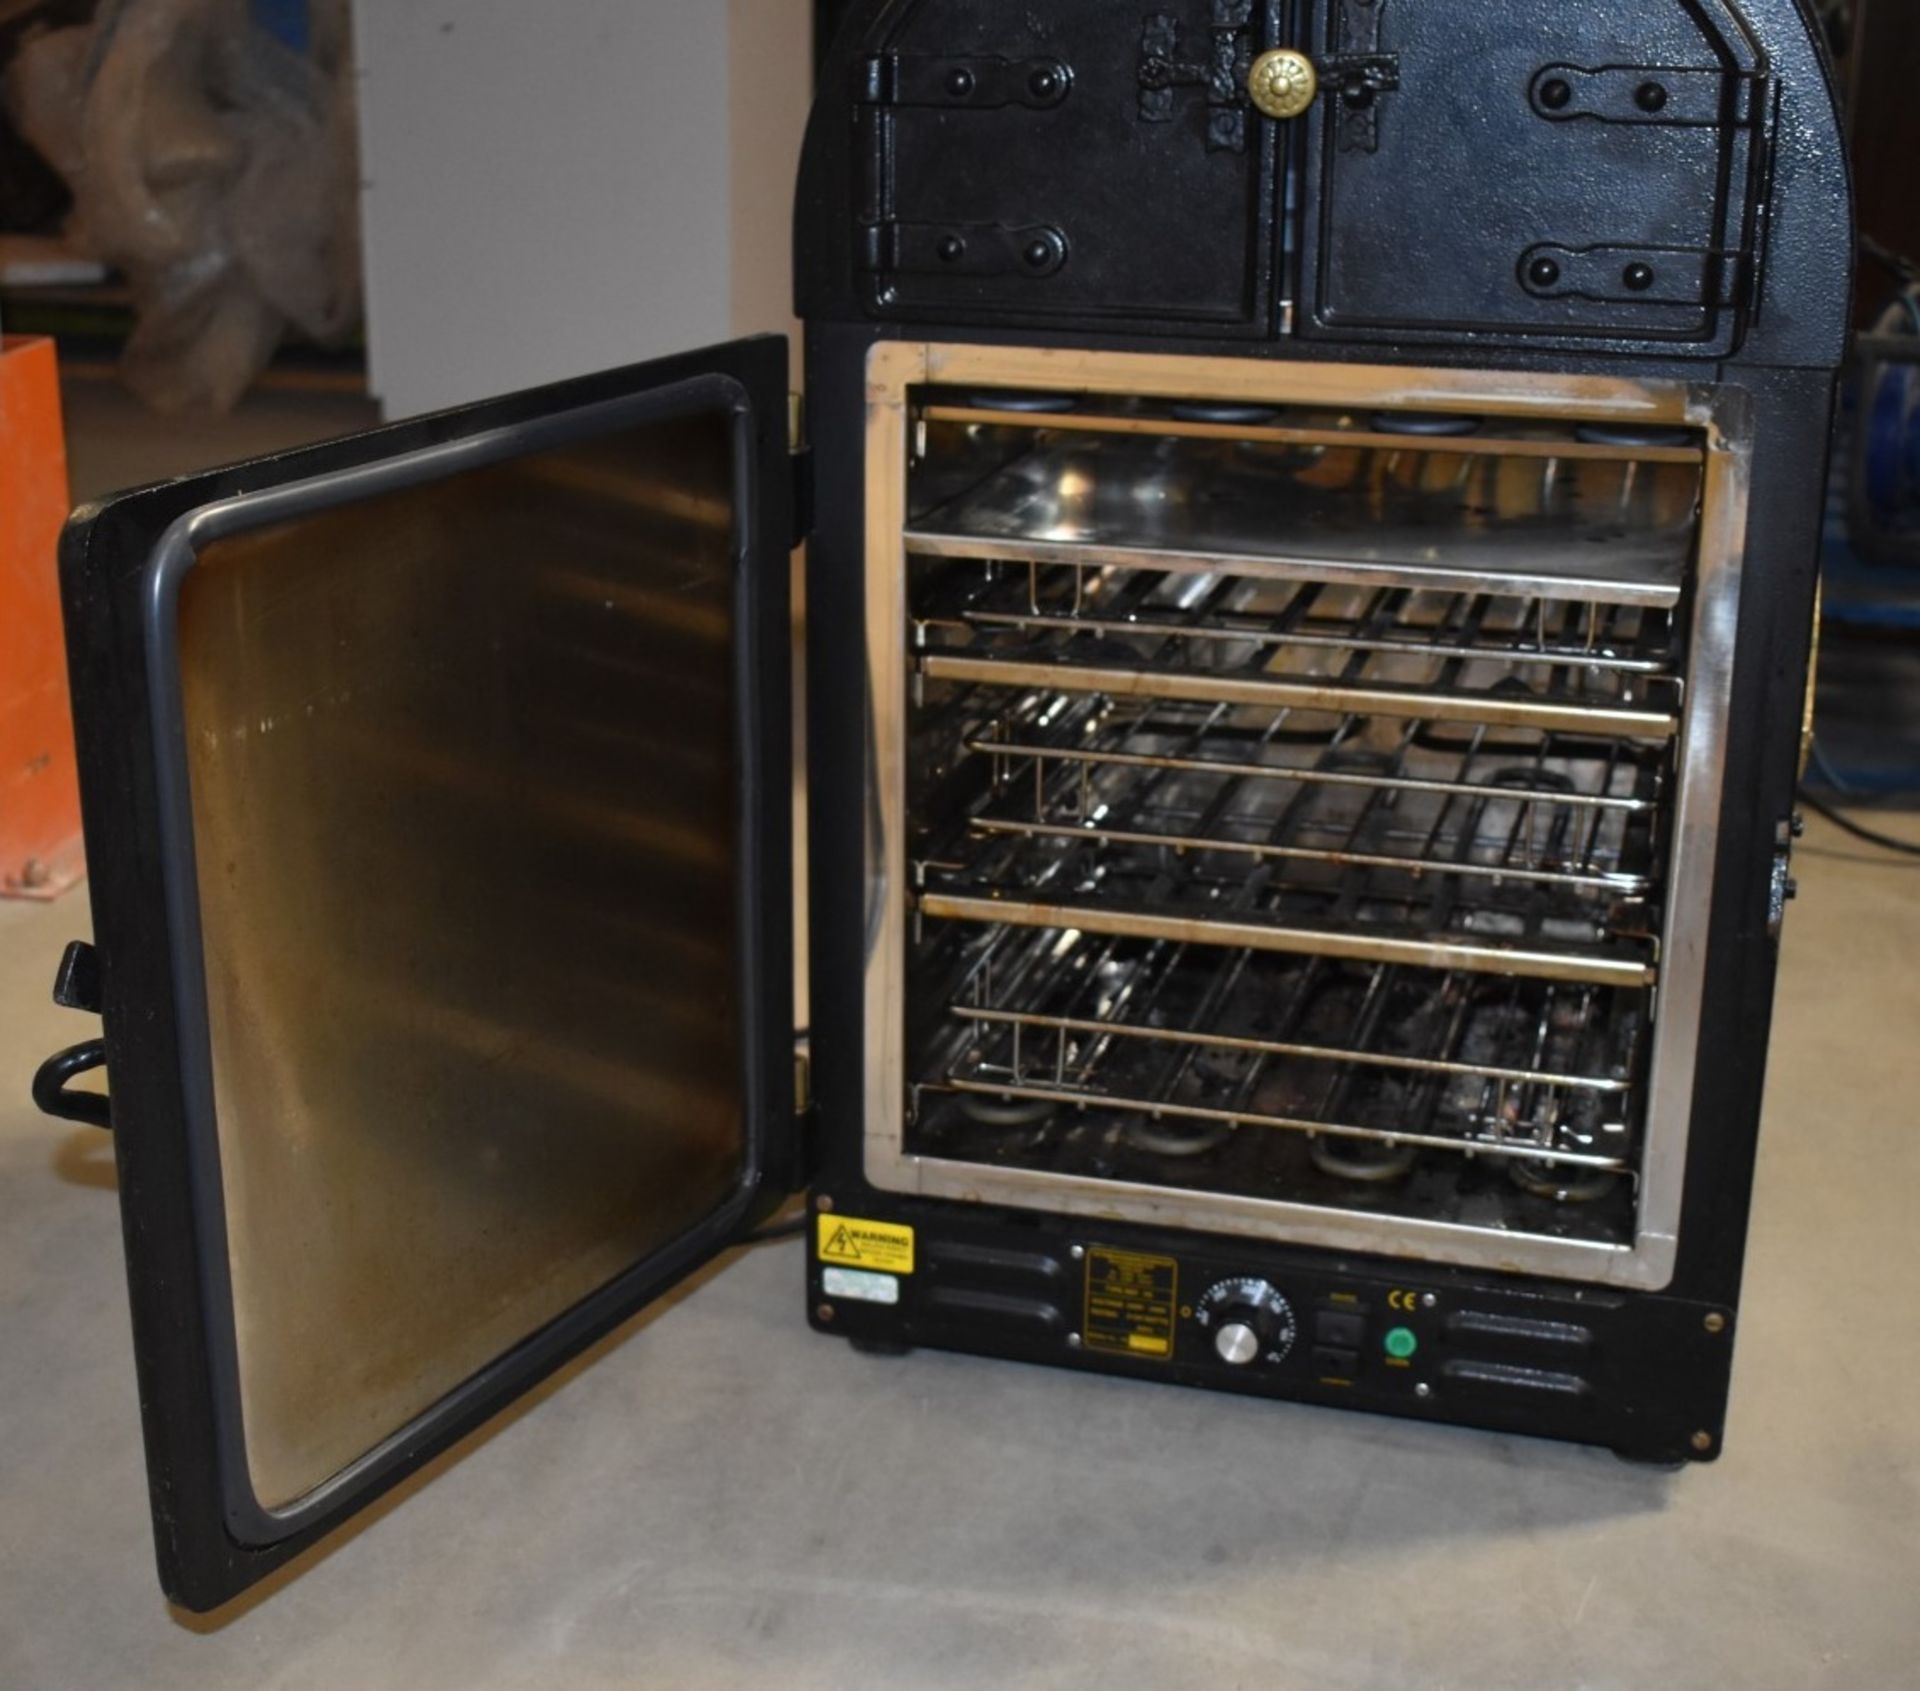 1 x Victorian Village Stove Potato Baking Oven - Model VS - 45 Potato Capacity - Approx RRP £2,600 - Image 15 of 18